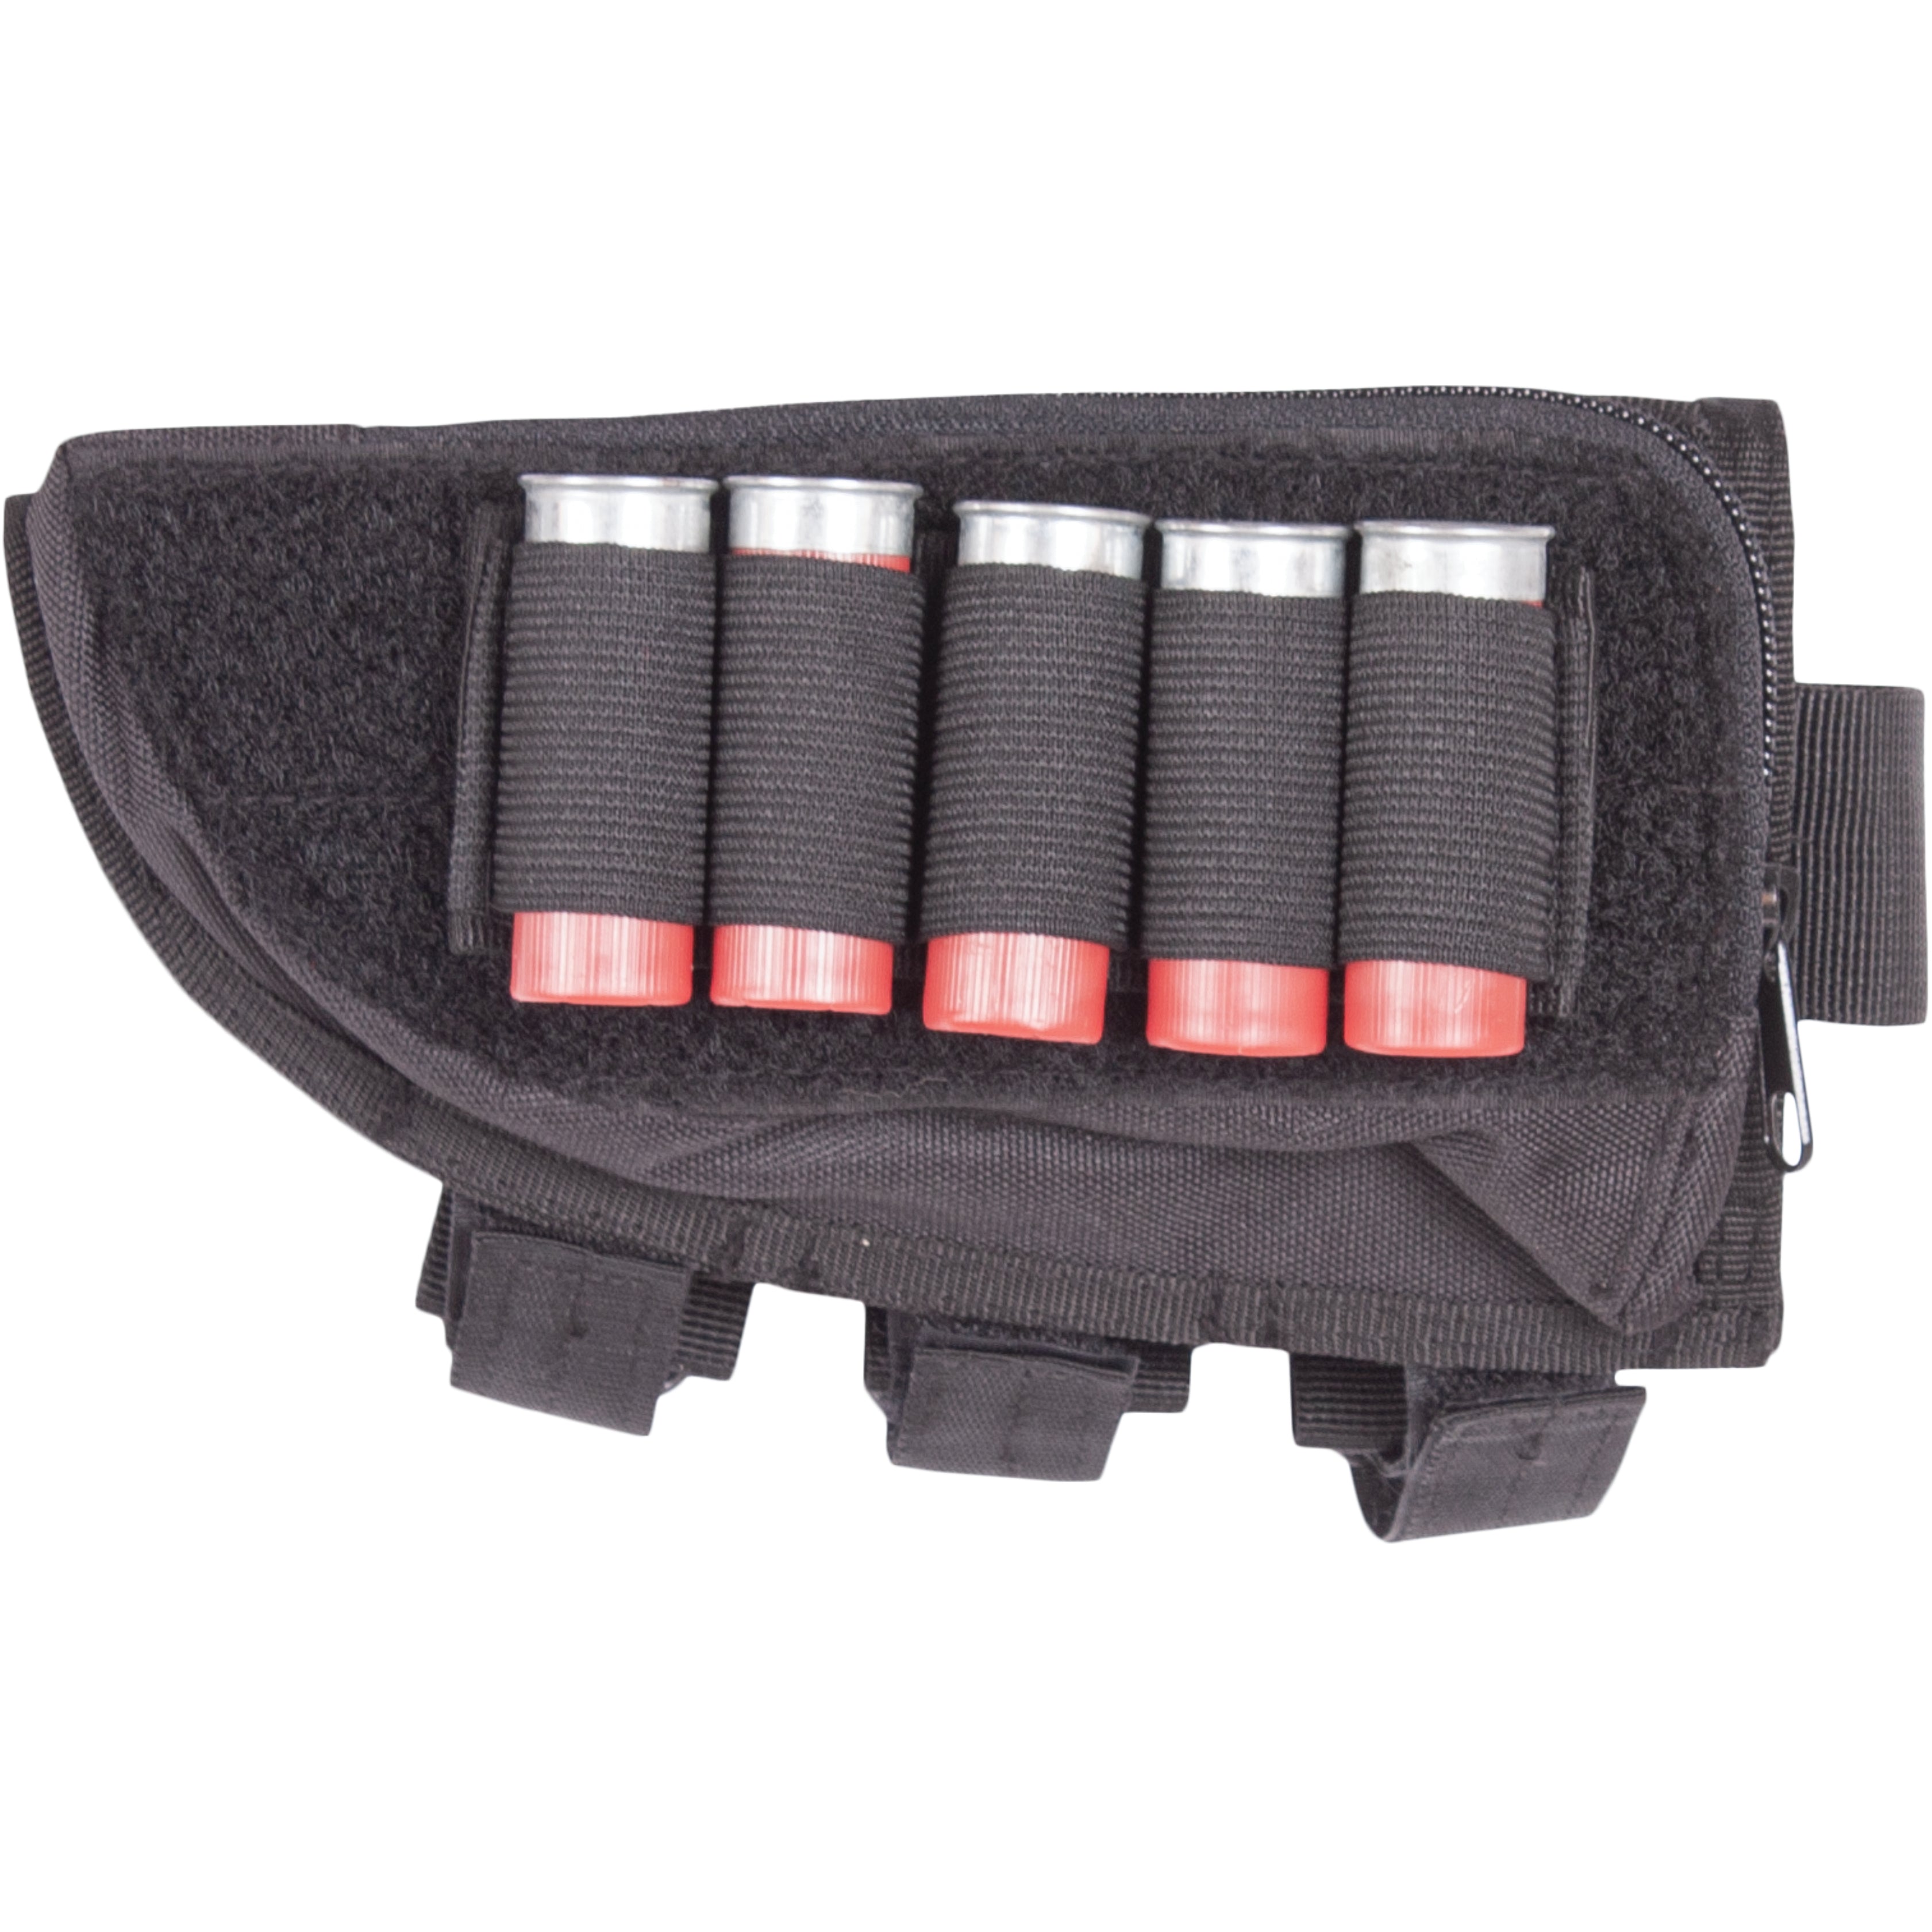 Hot Portable Adjustable Nylon Tactical Butt Stock Shotgun Cheek